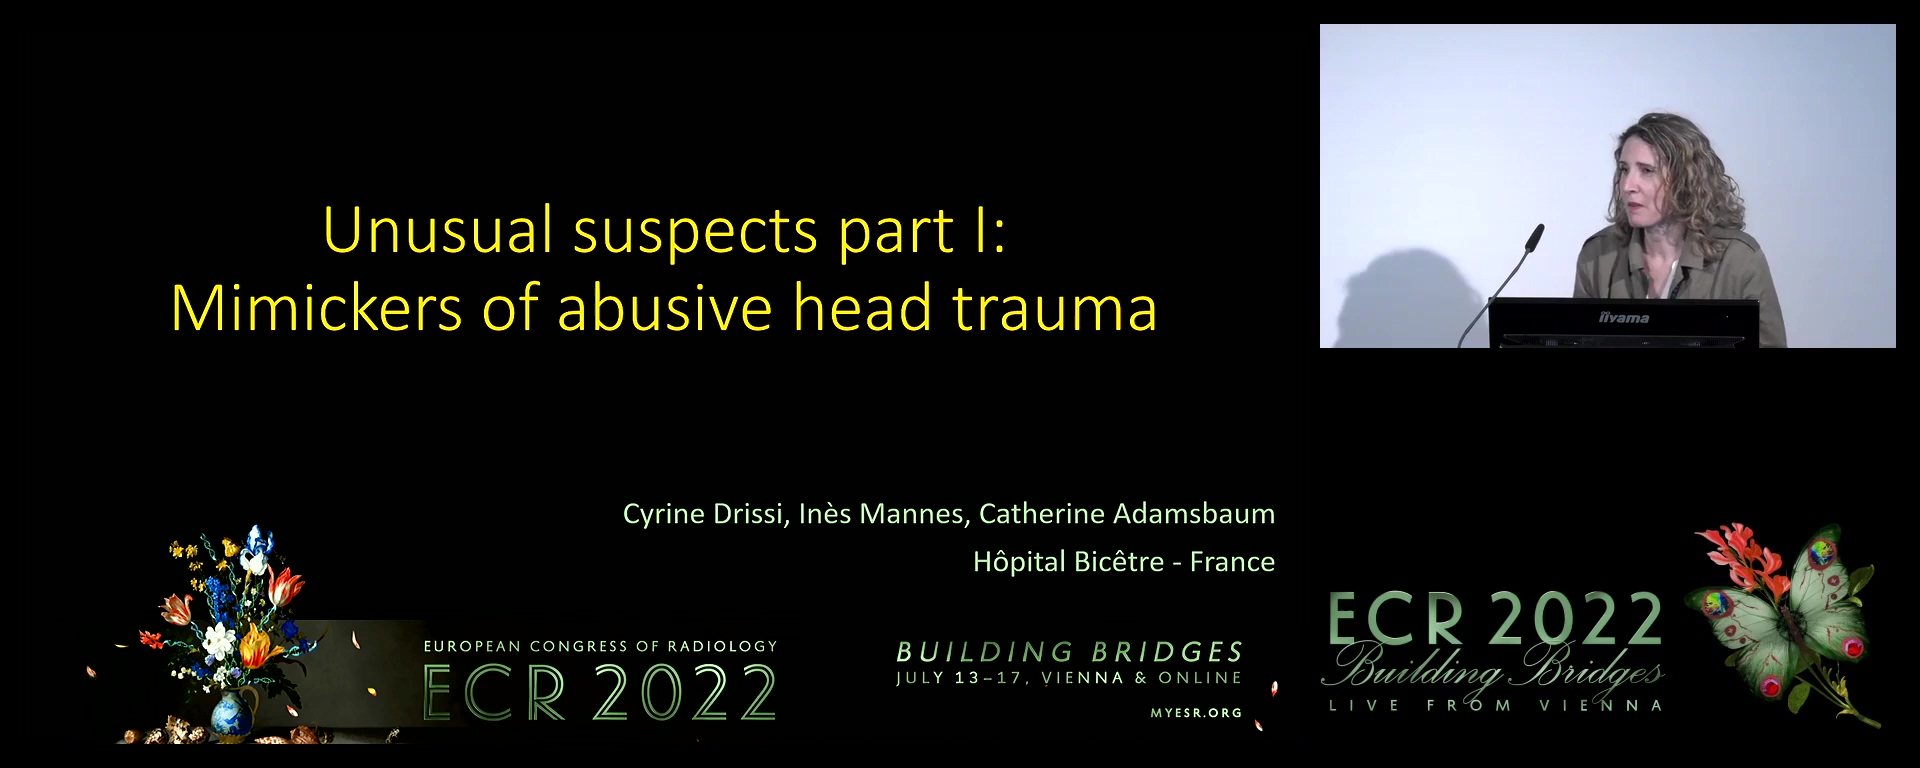 Unusual suspects part 1: mimickers of abusive head trauma